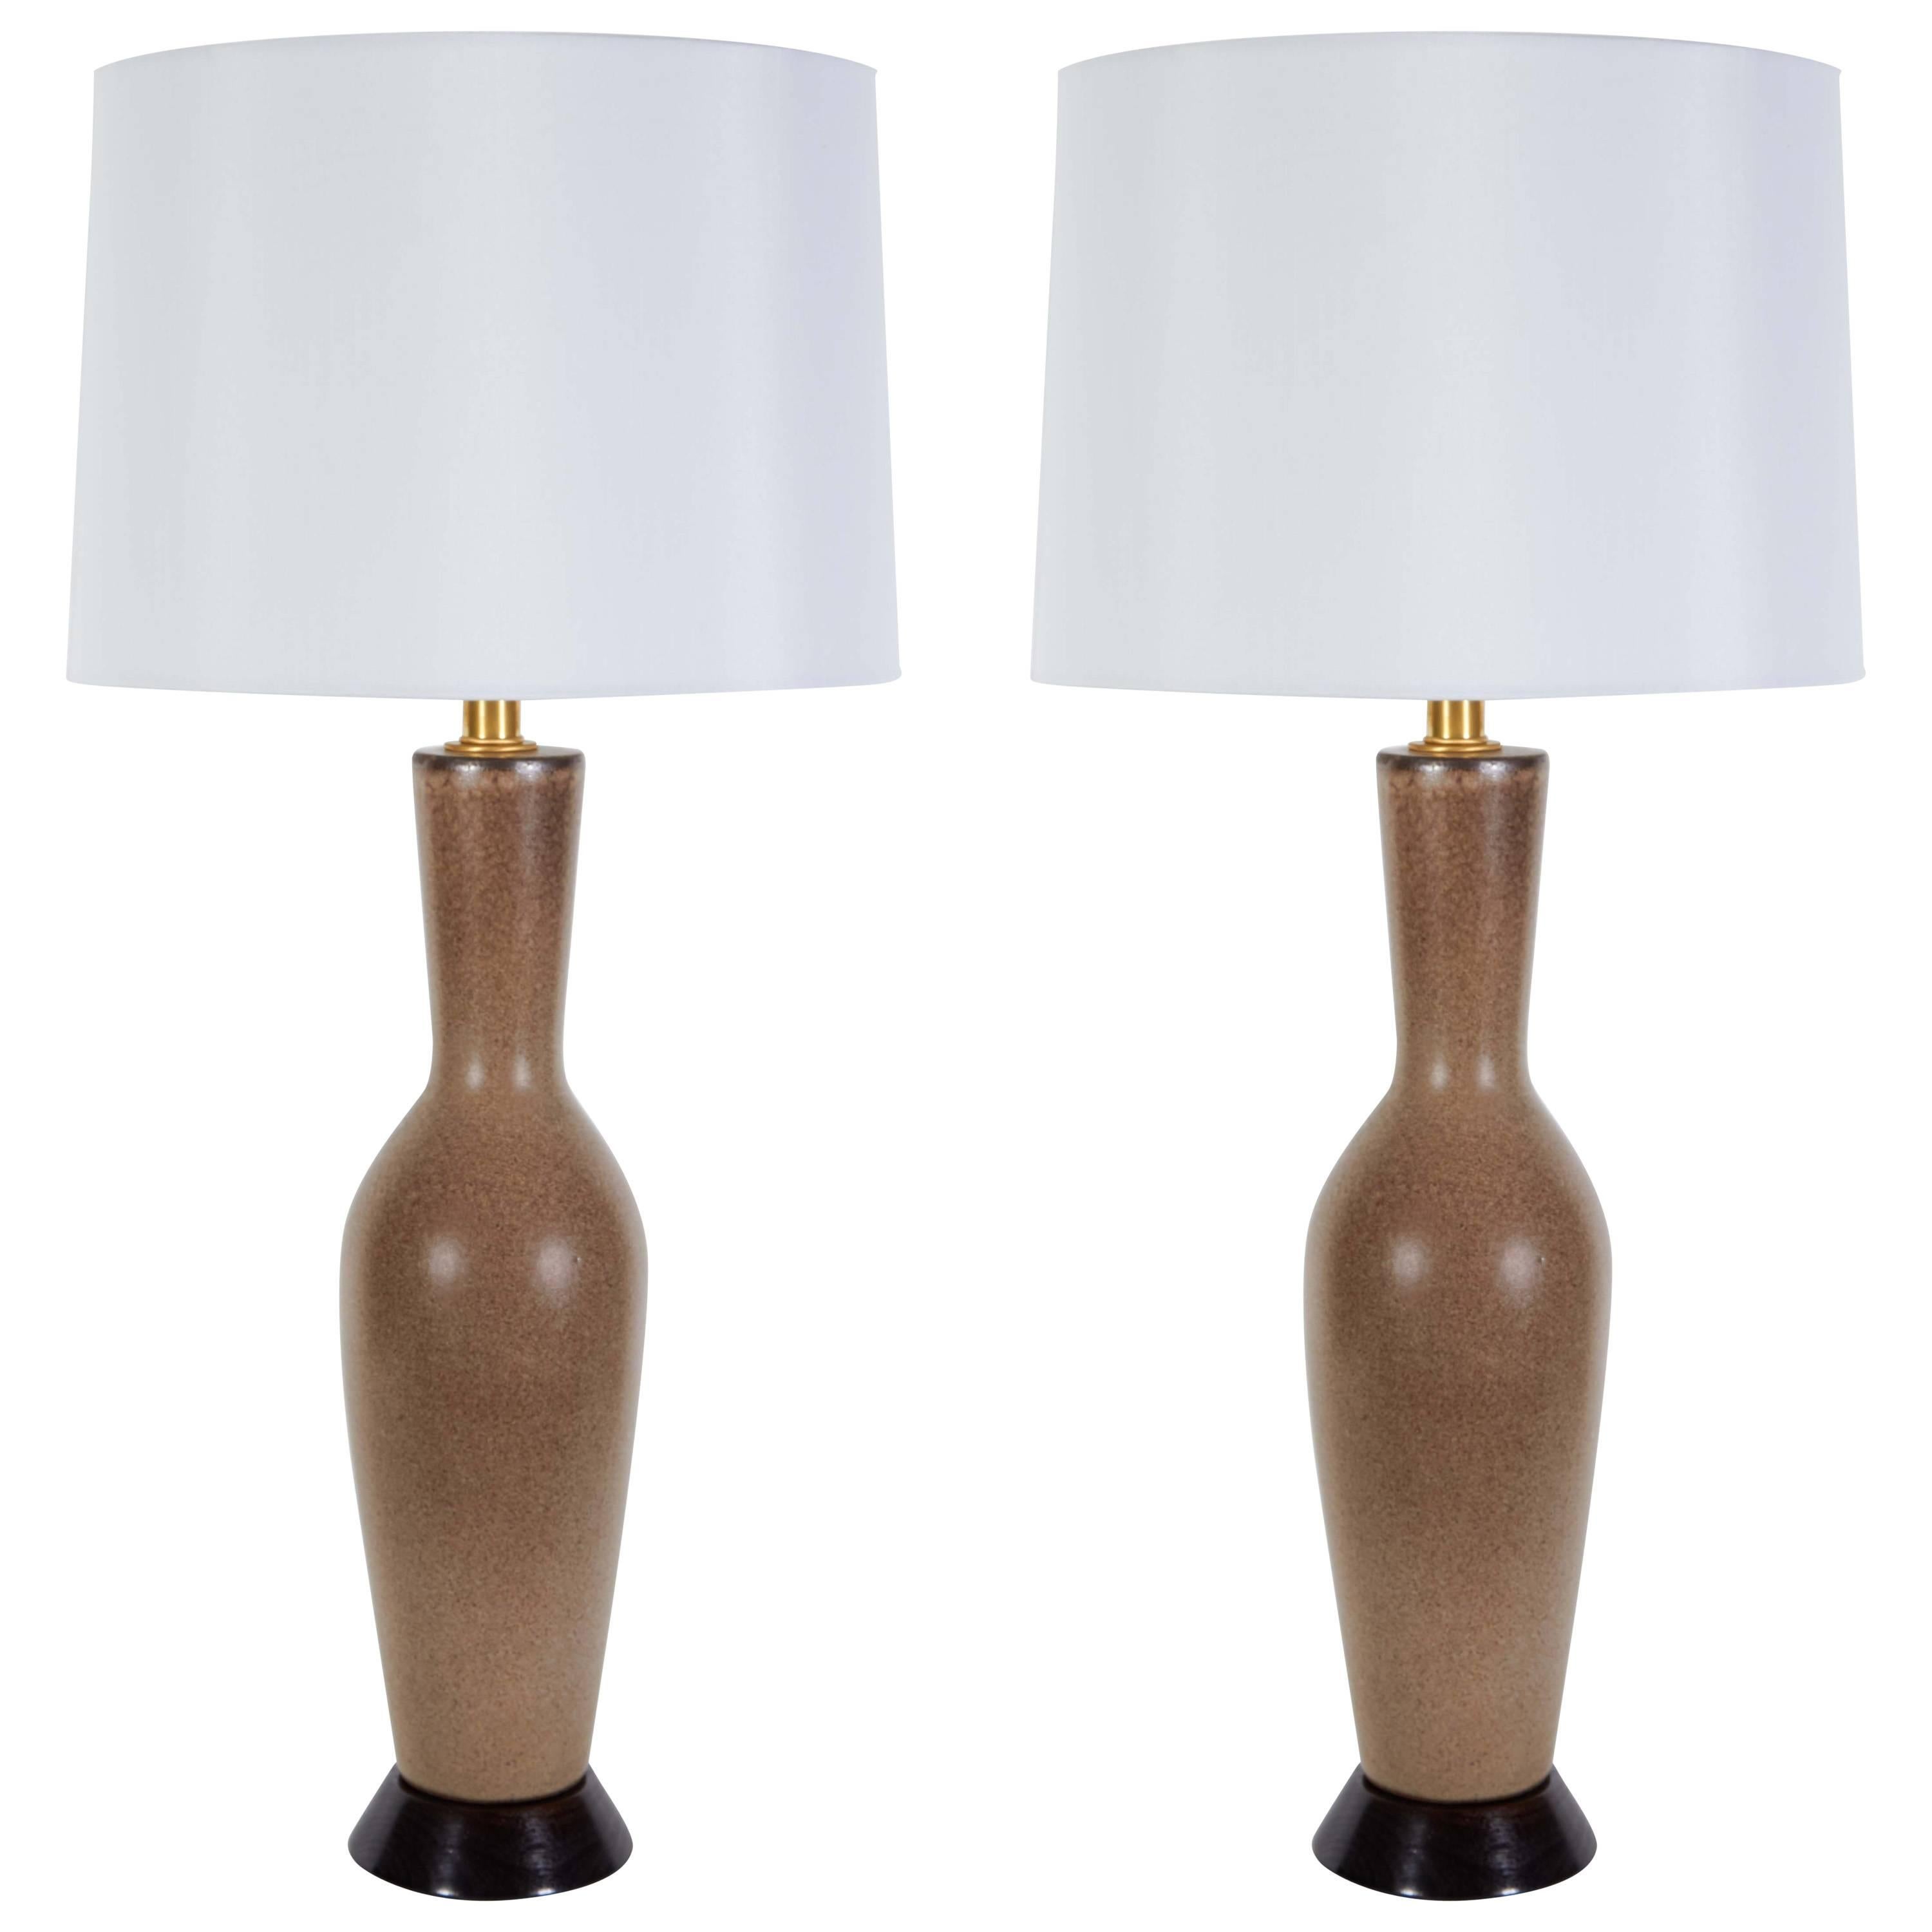 Italian Tan/Brown Speckled Glazed Lamps